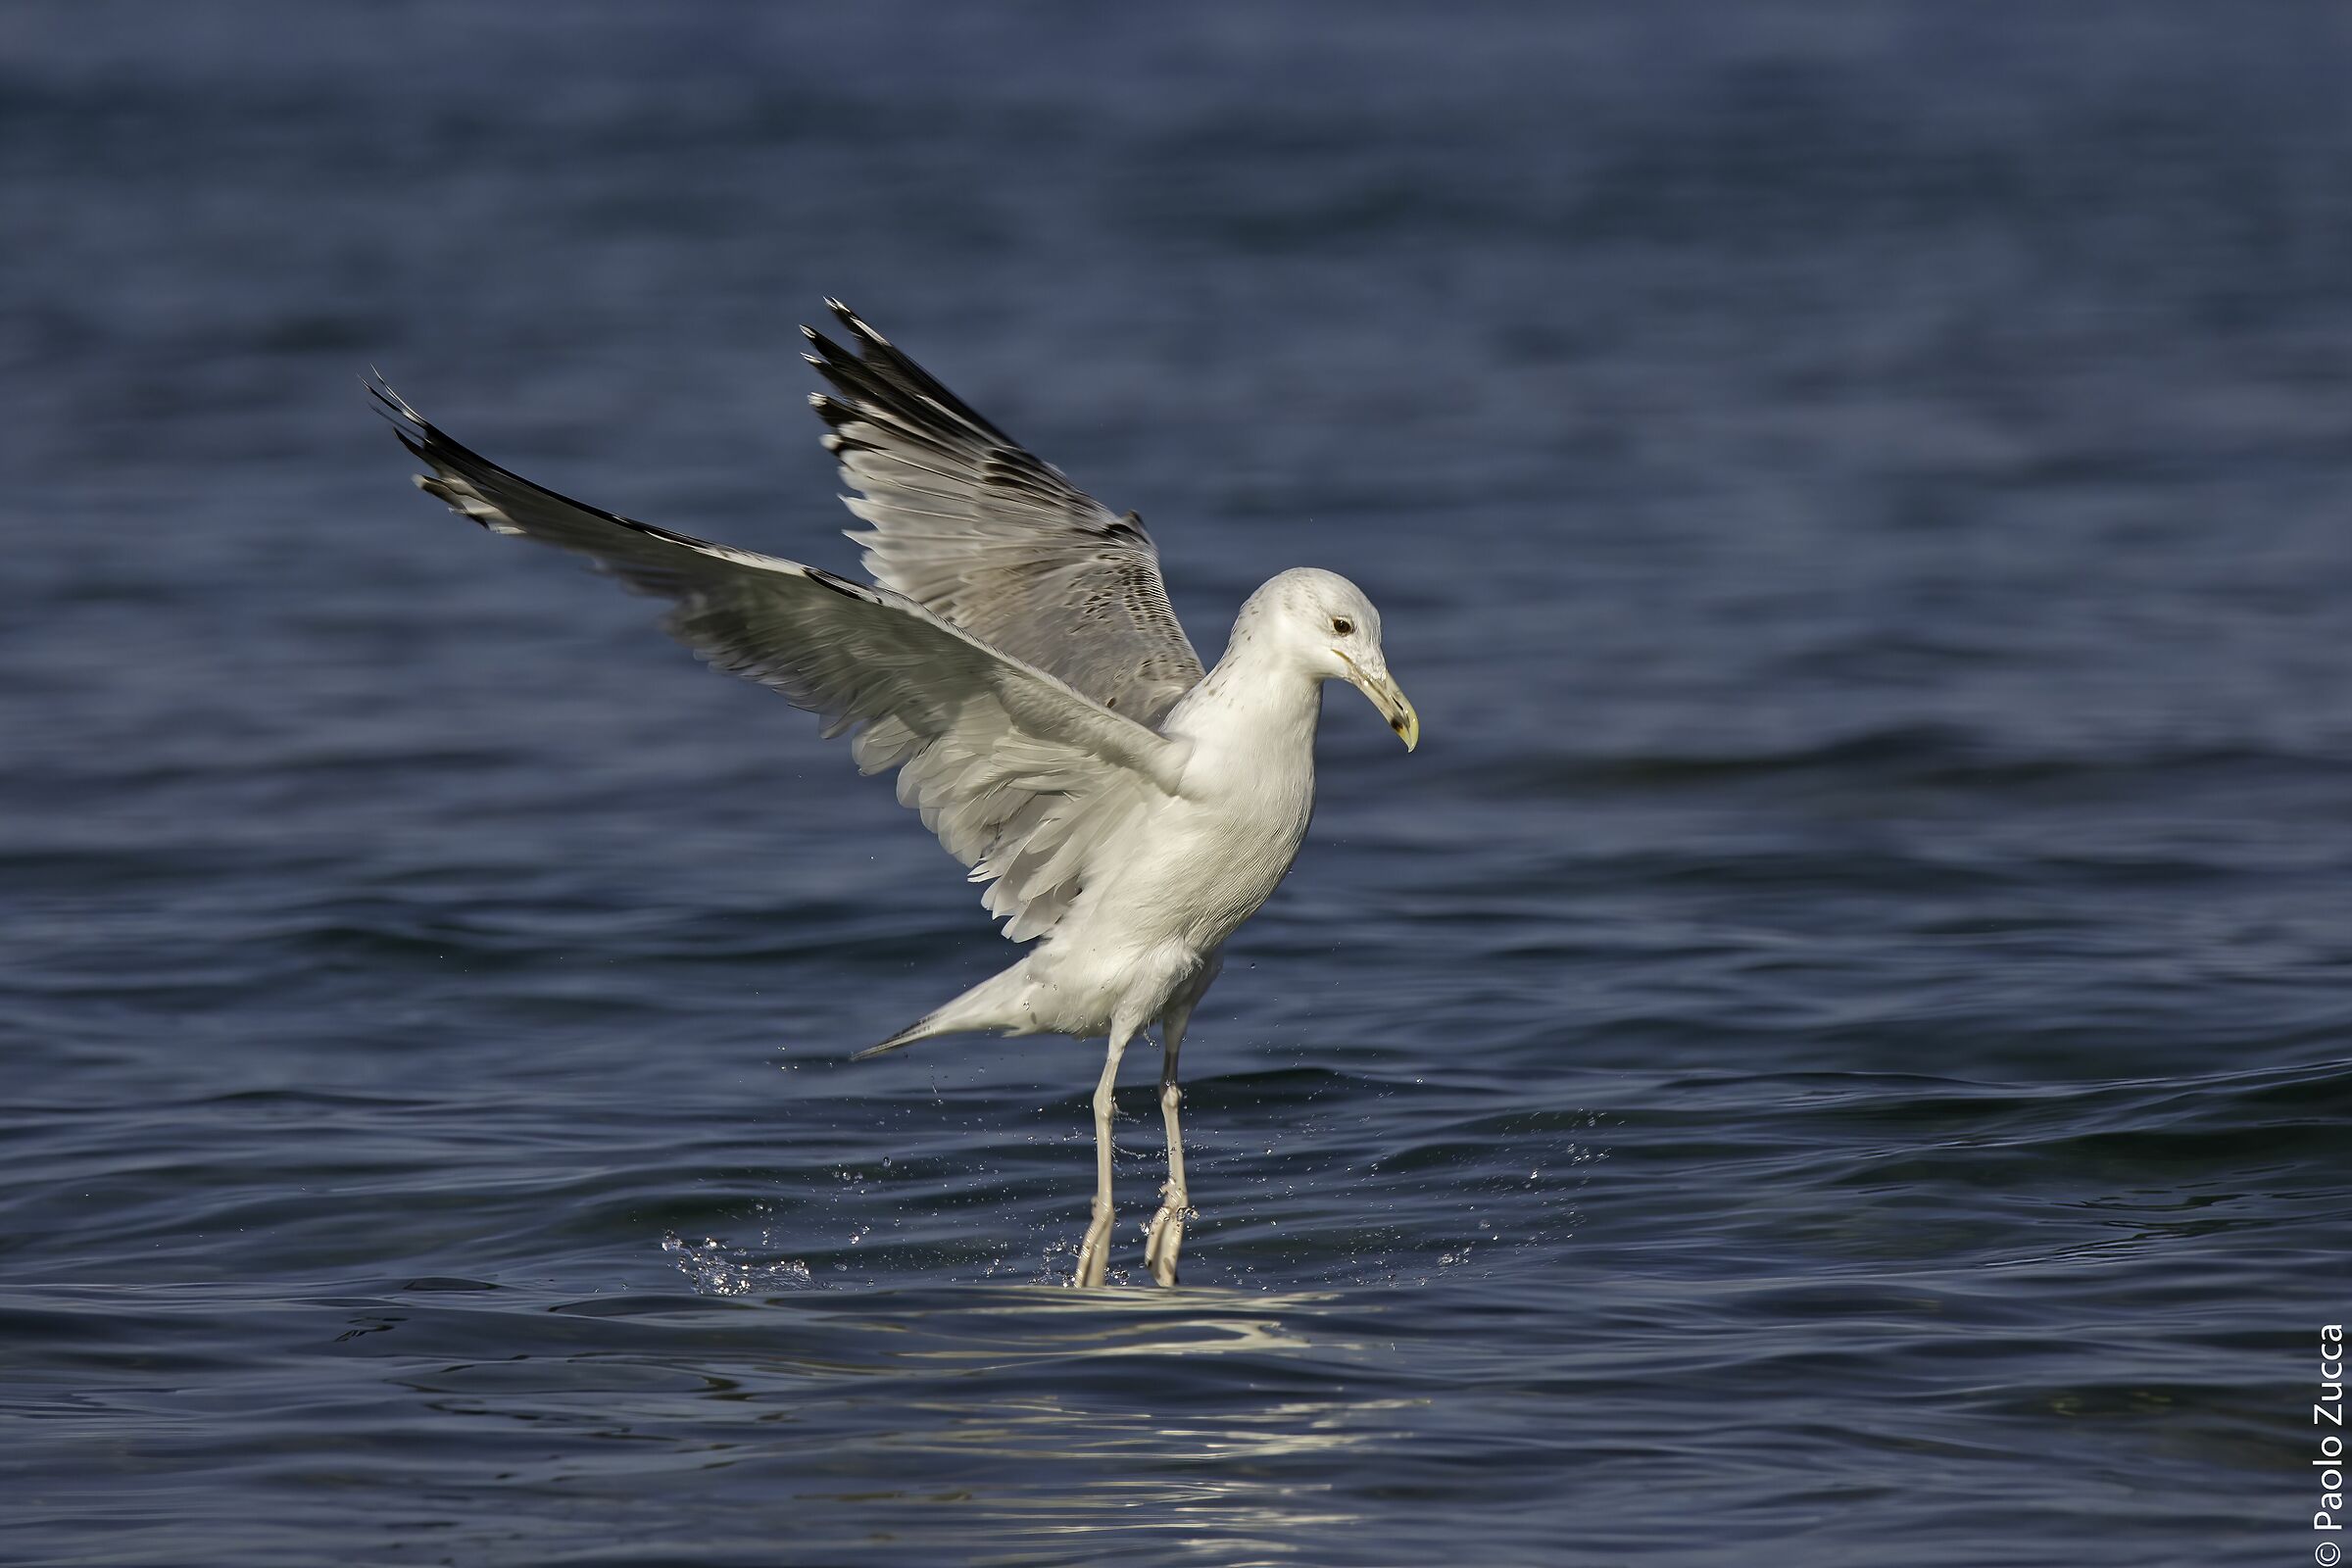 Seagull pontius dancing on water...